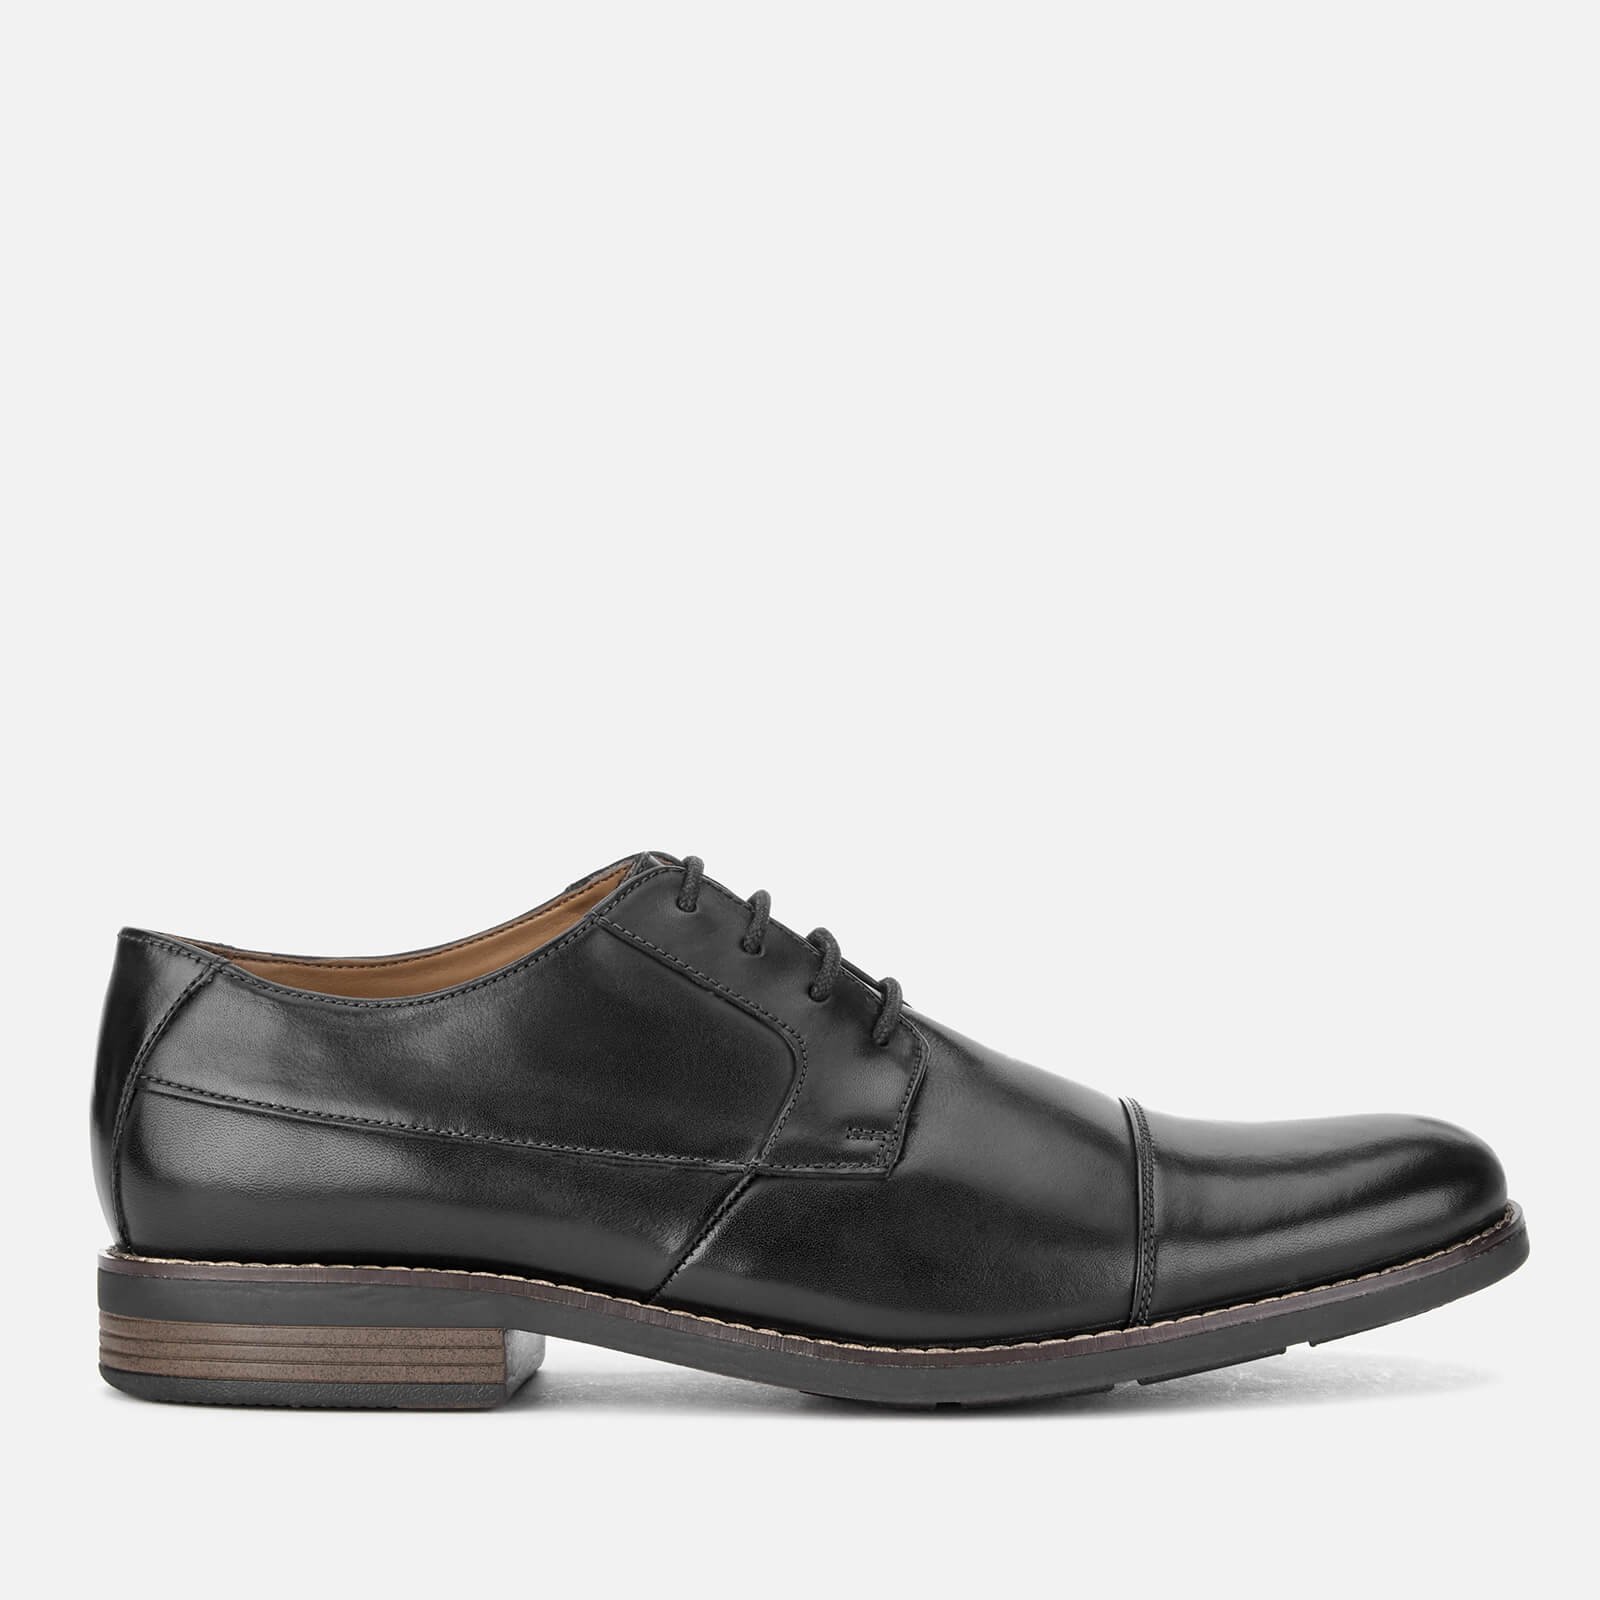 Clarks Men's Becken Cap Leather Derby Shoes - Black - UK 9